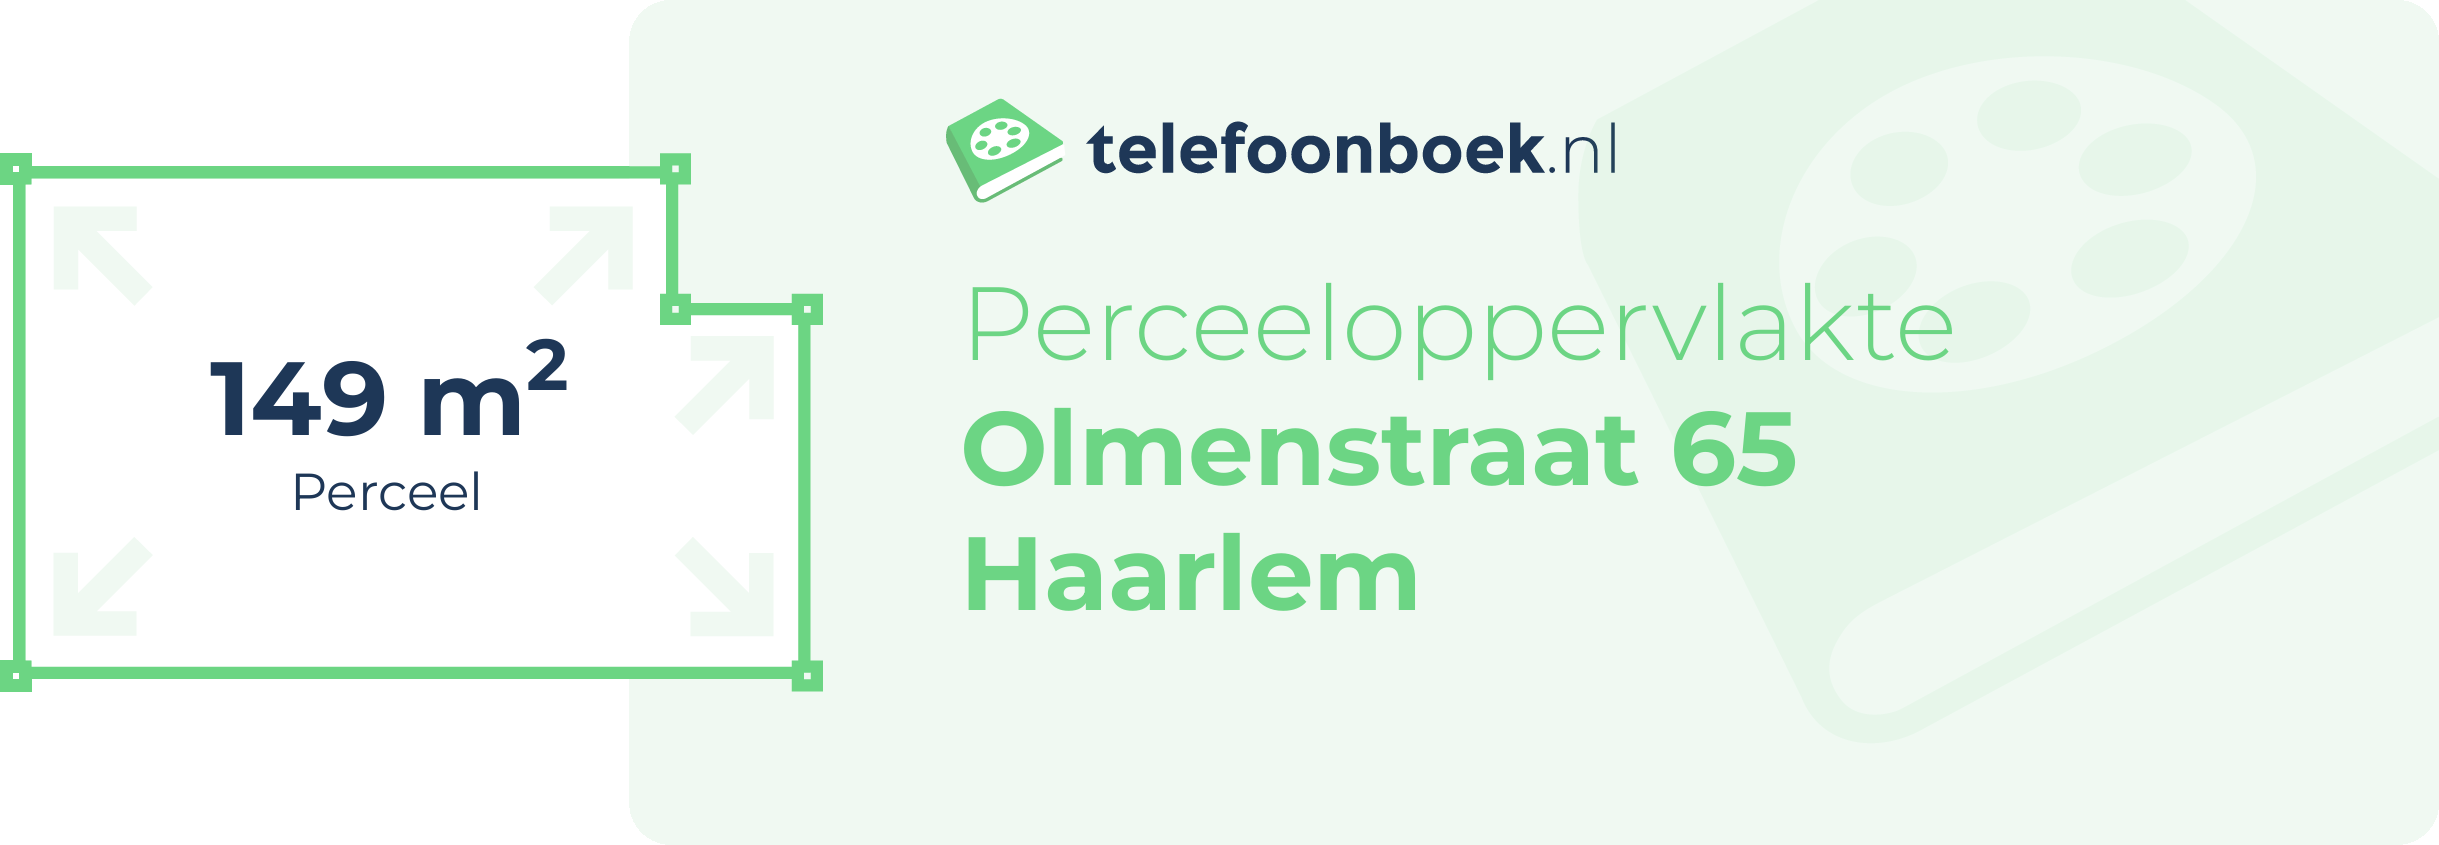 Perceeloppervlakte Olmenstraat 65 Haarlem